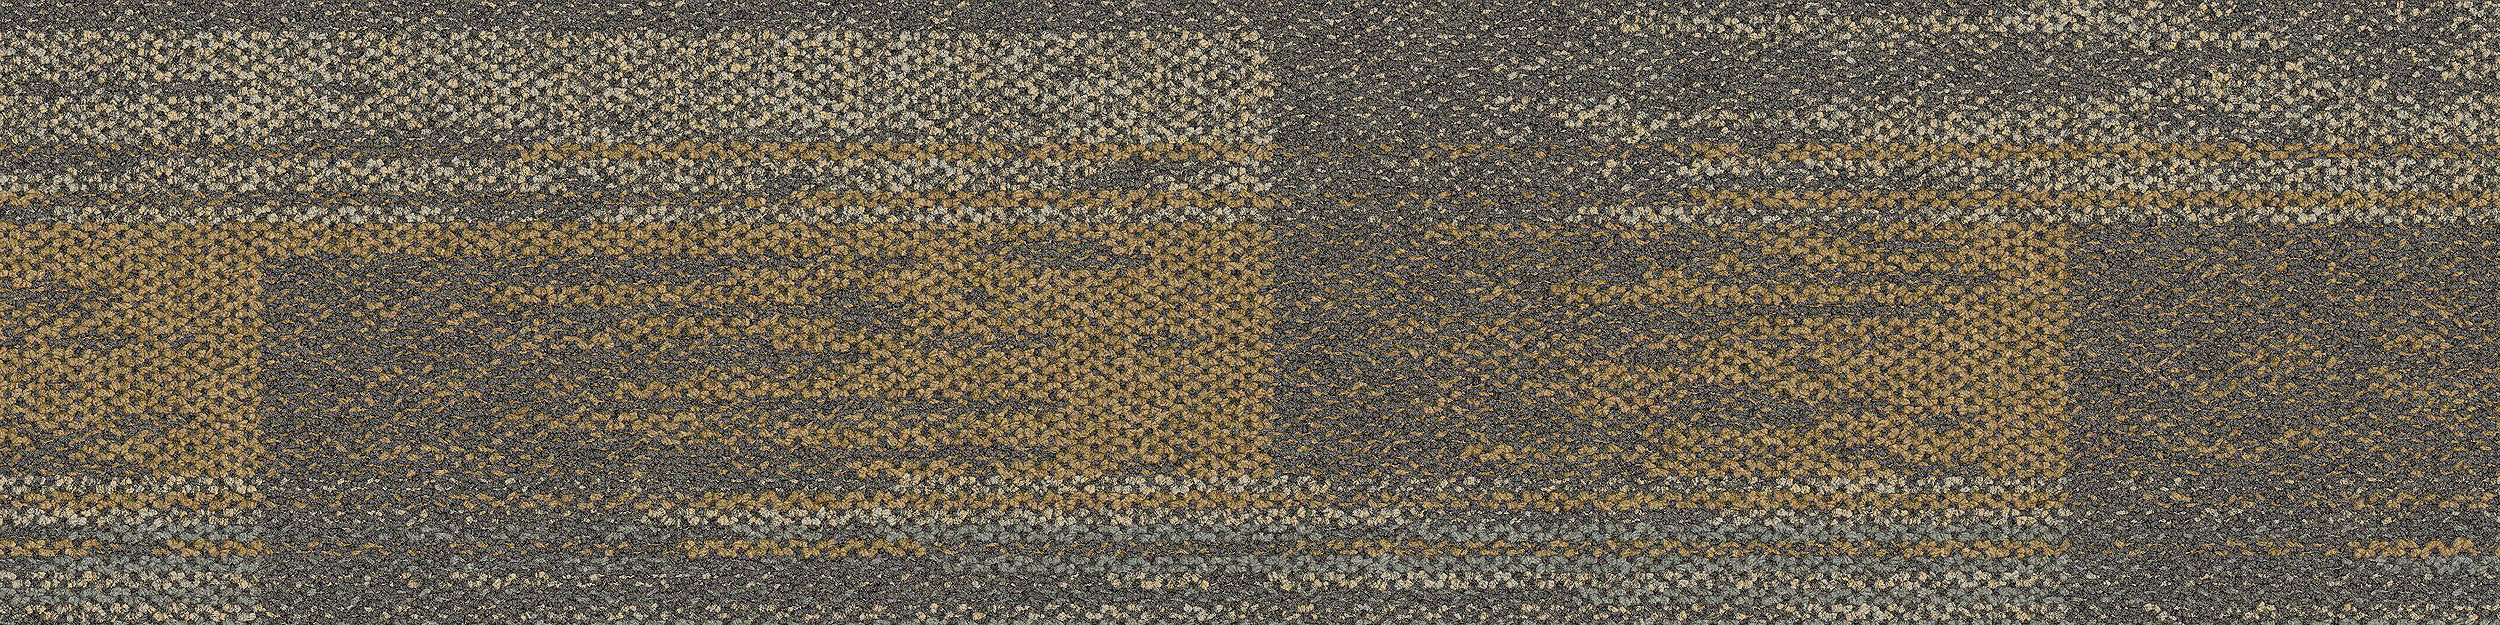 AE313 Carpet Tile In Greige/Honey image number 6